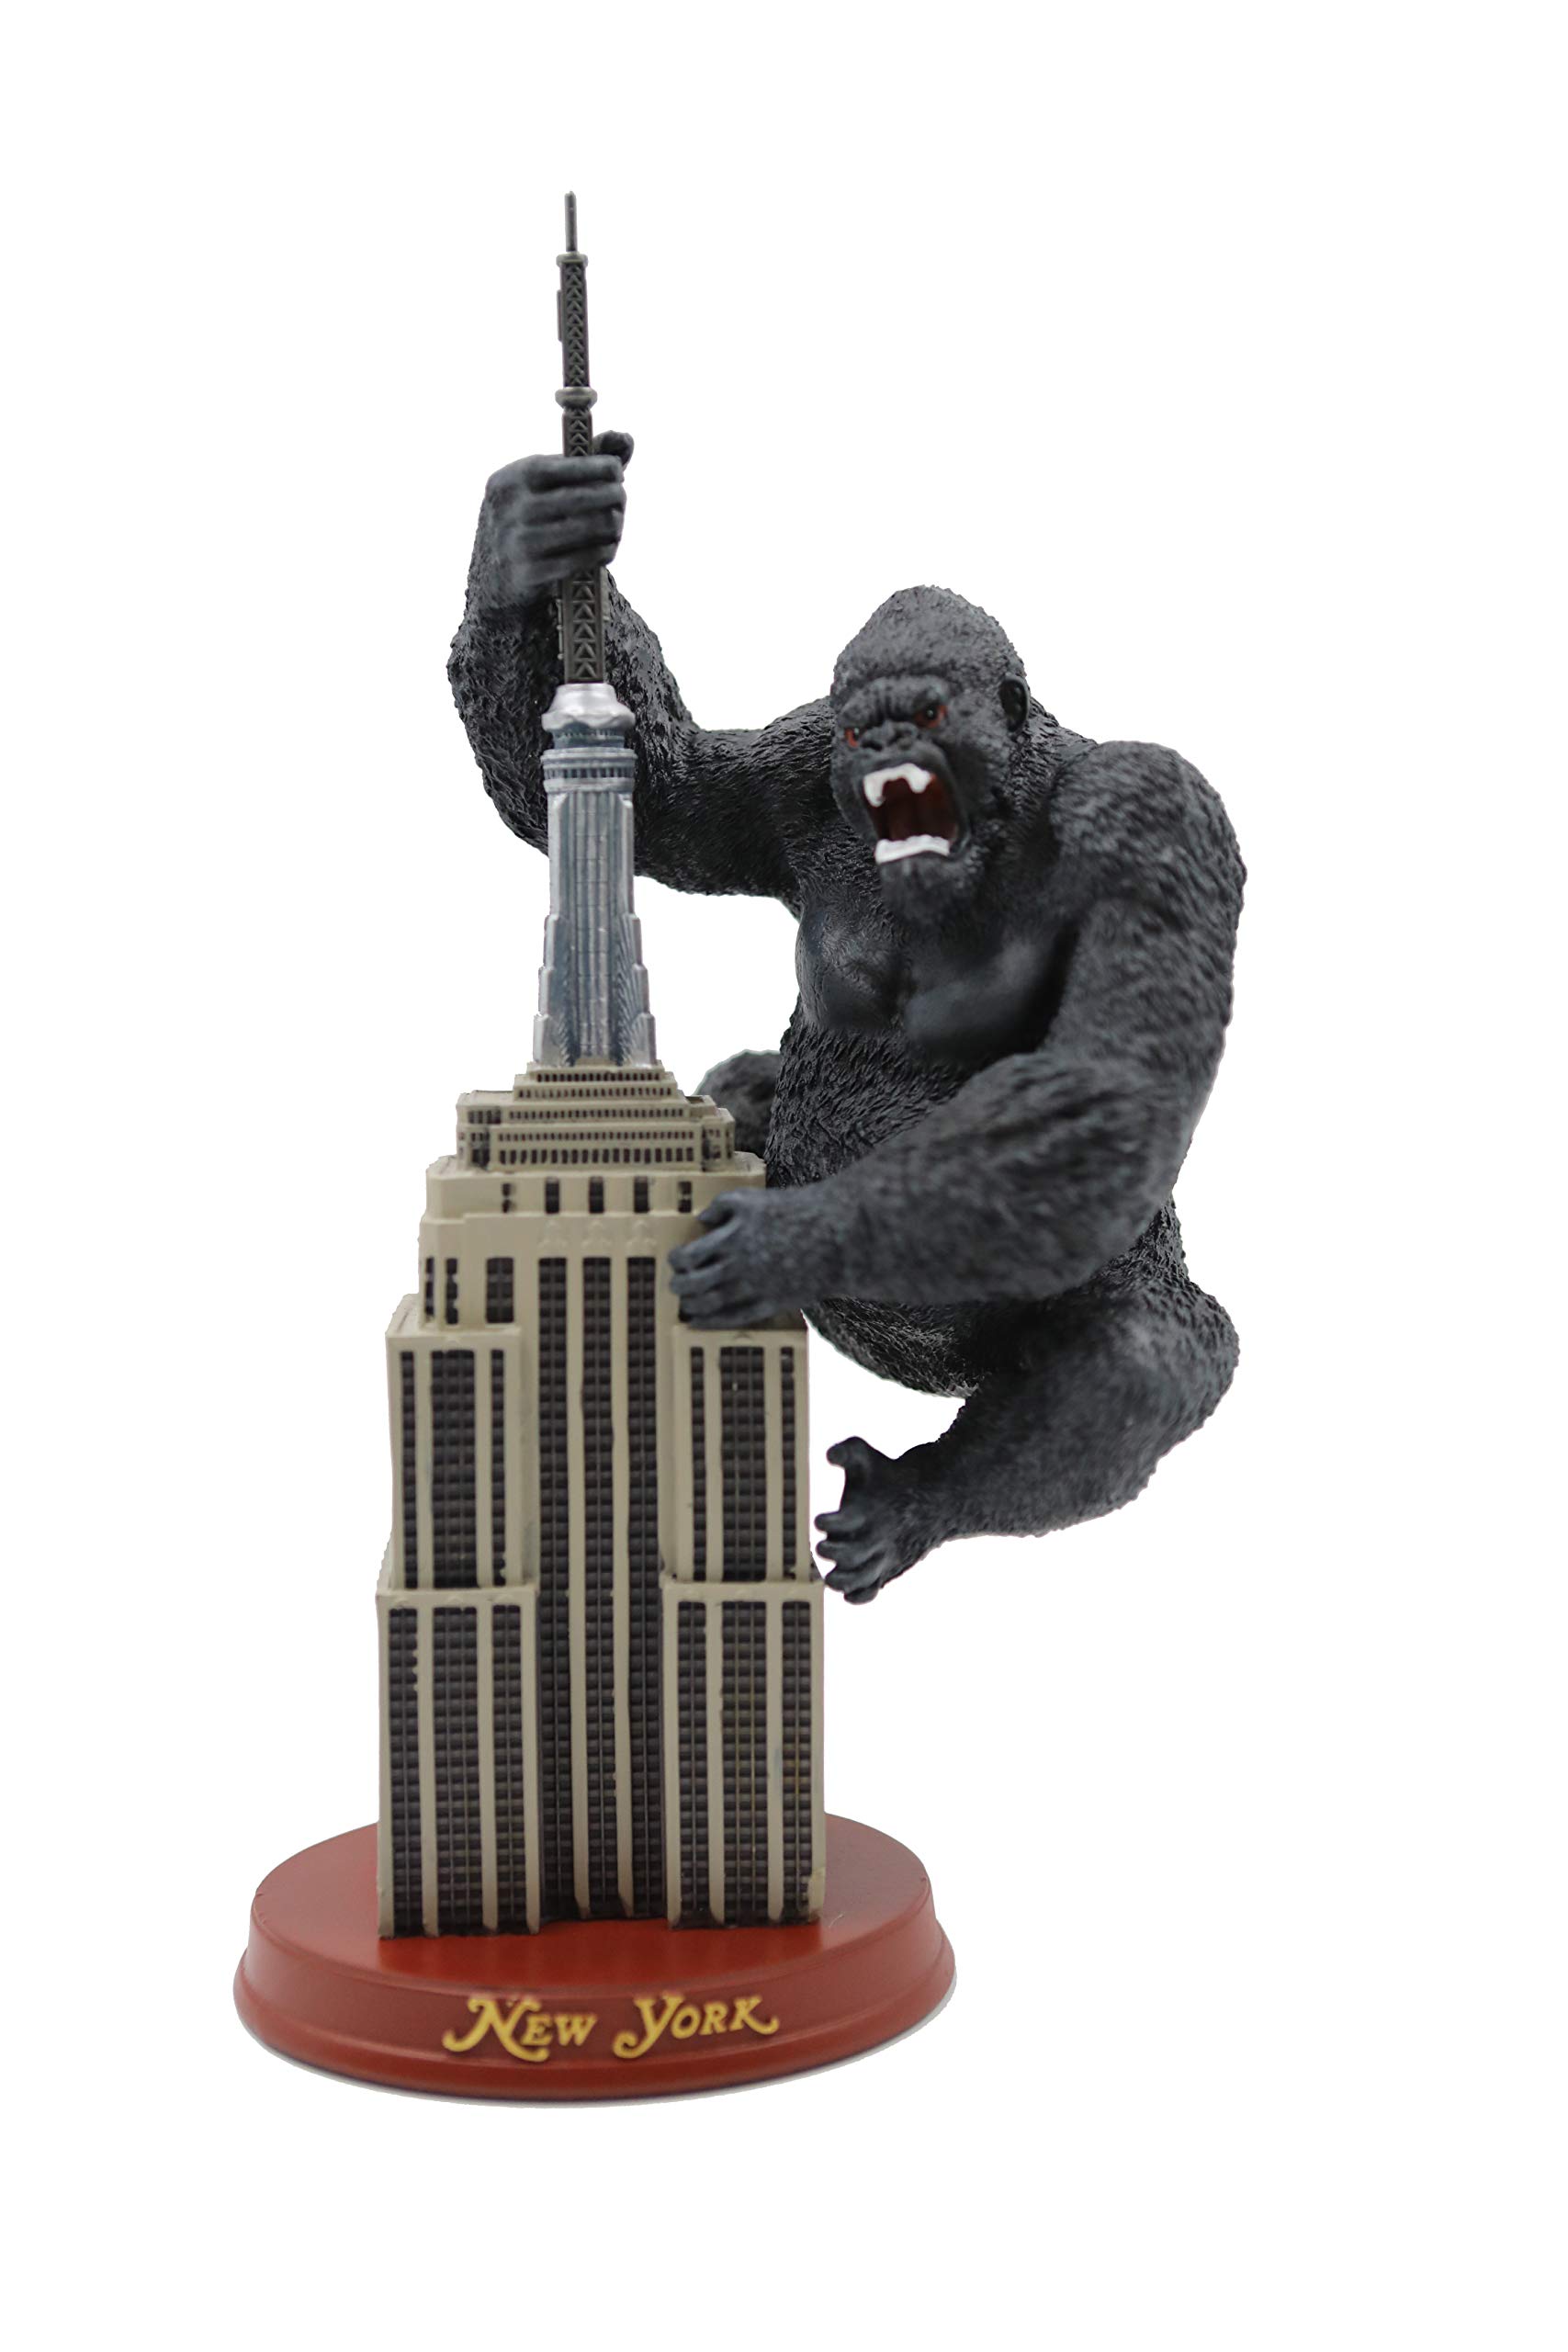 King Kong climbing a skyscraper